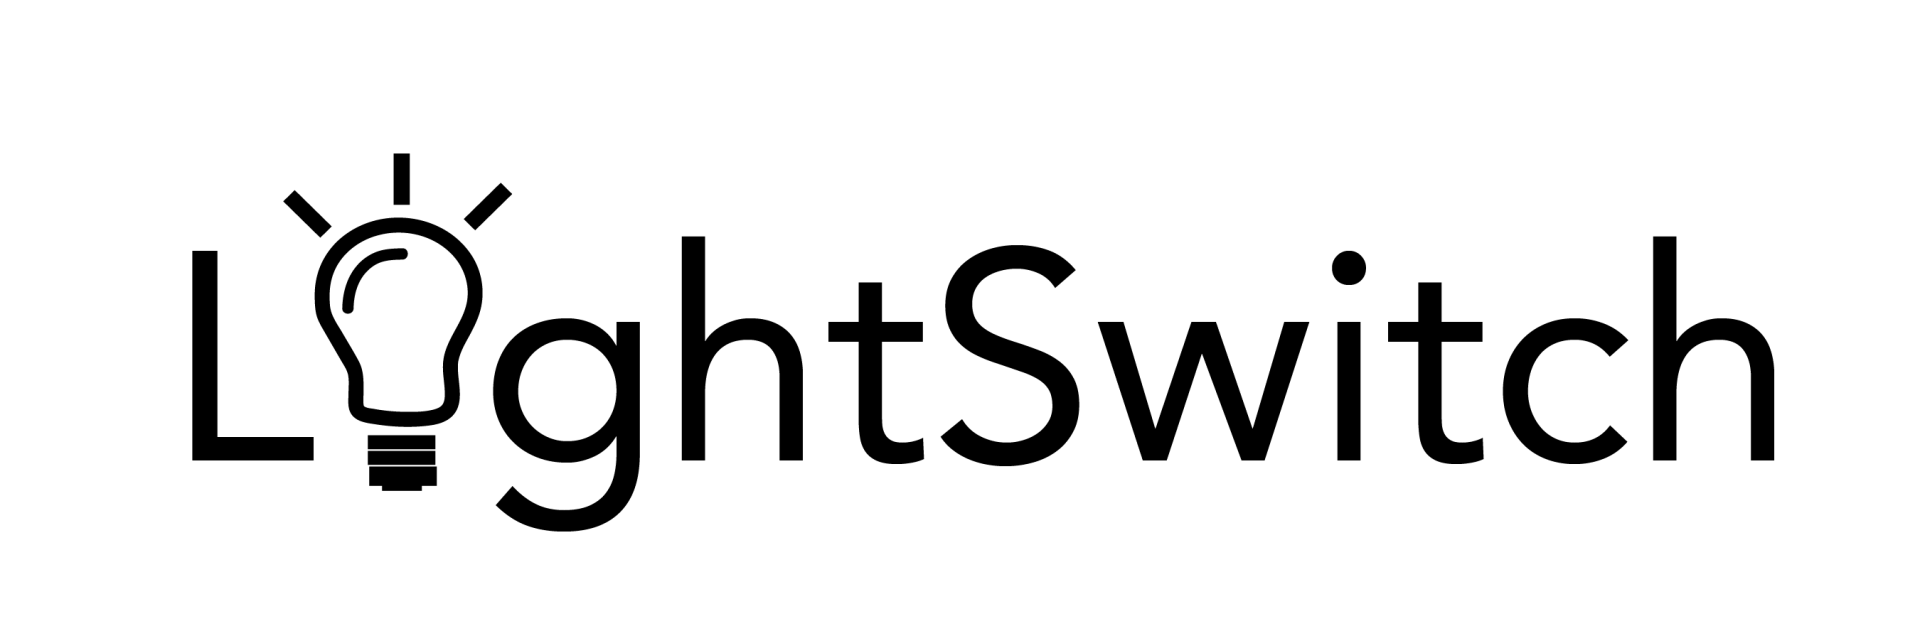 Light Switch Black Logo